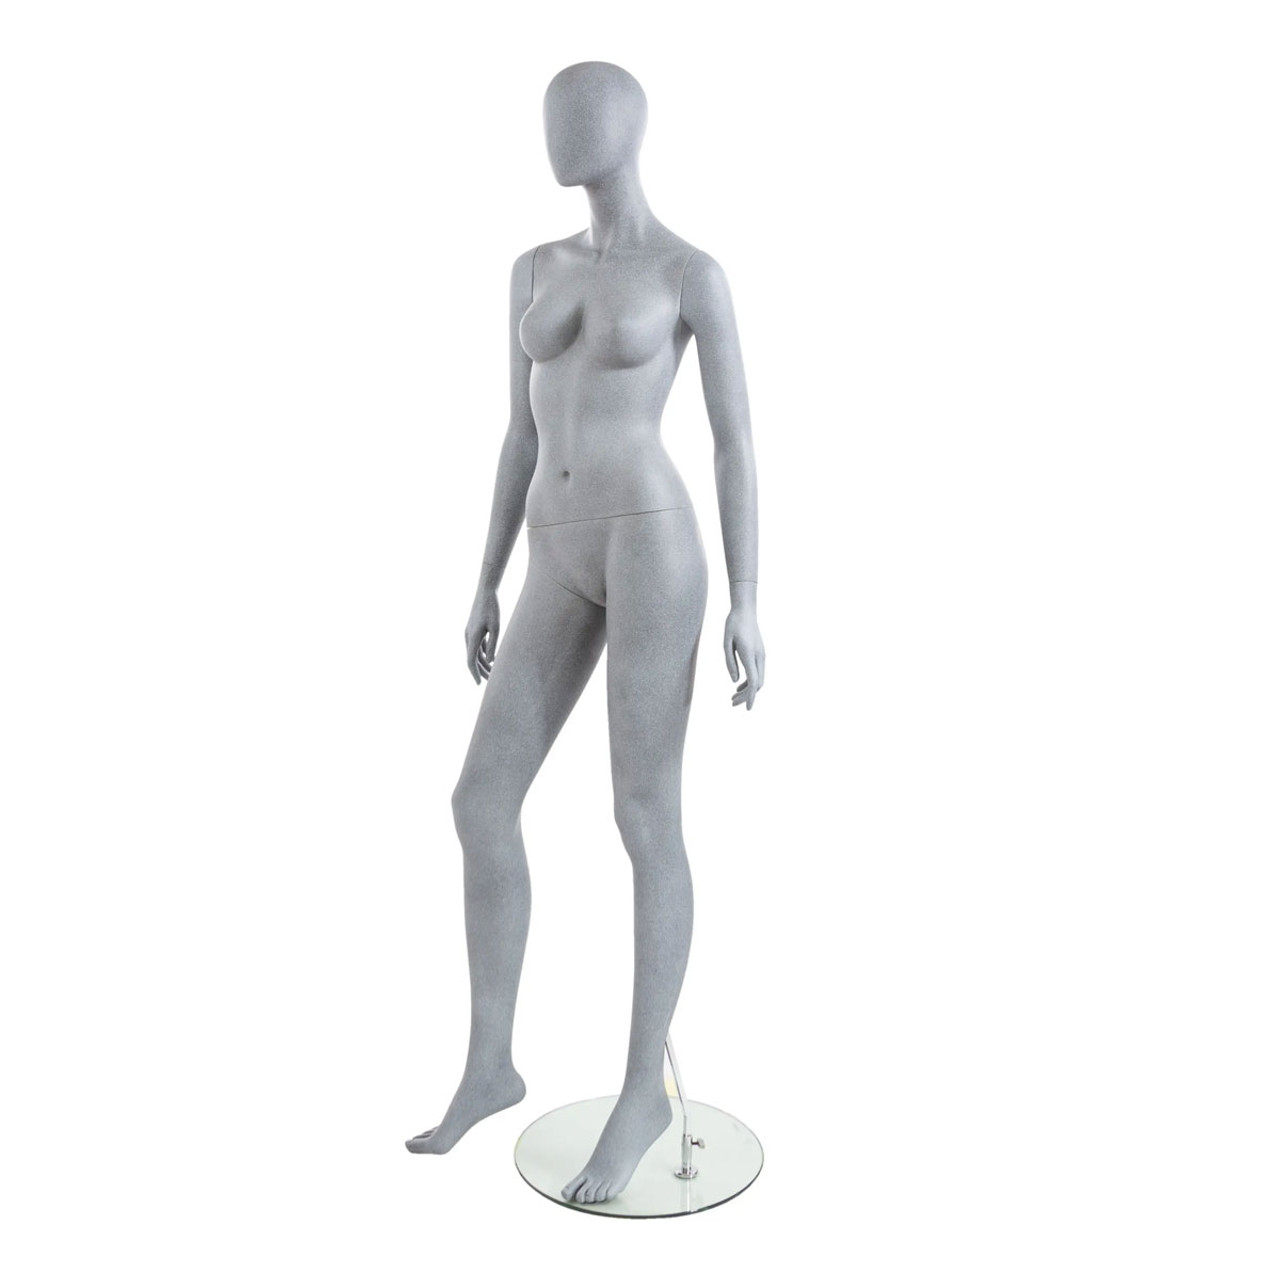 Premium Glossy White Female Full Body Mannequin